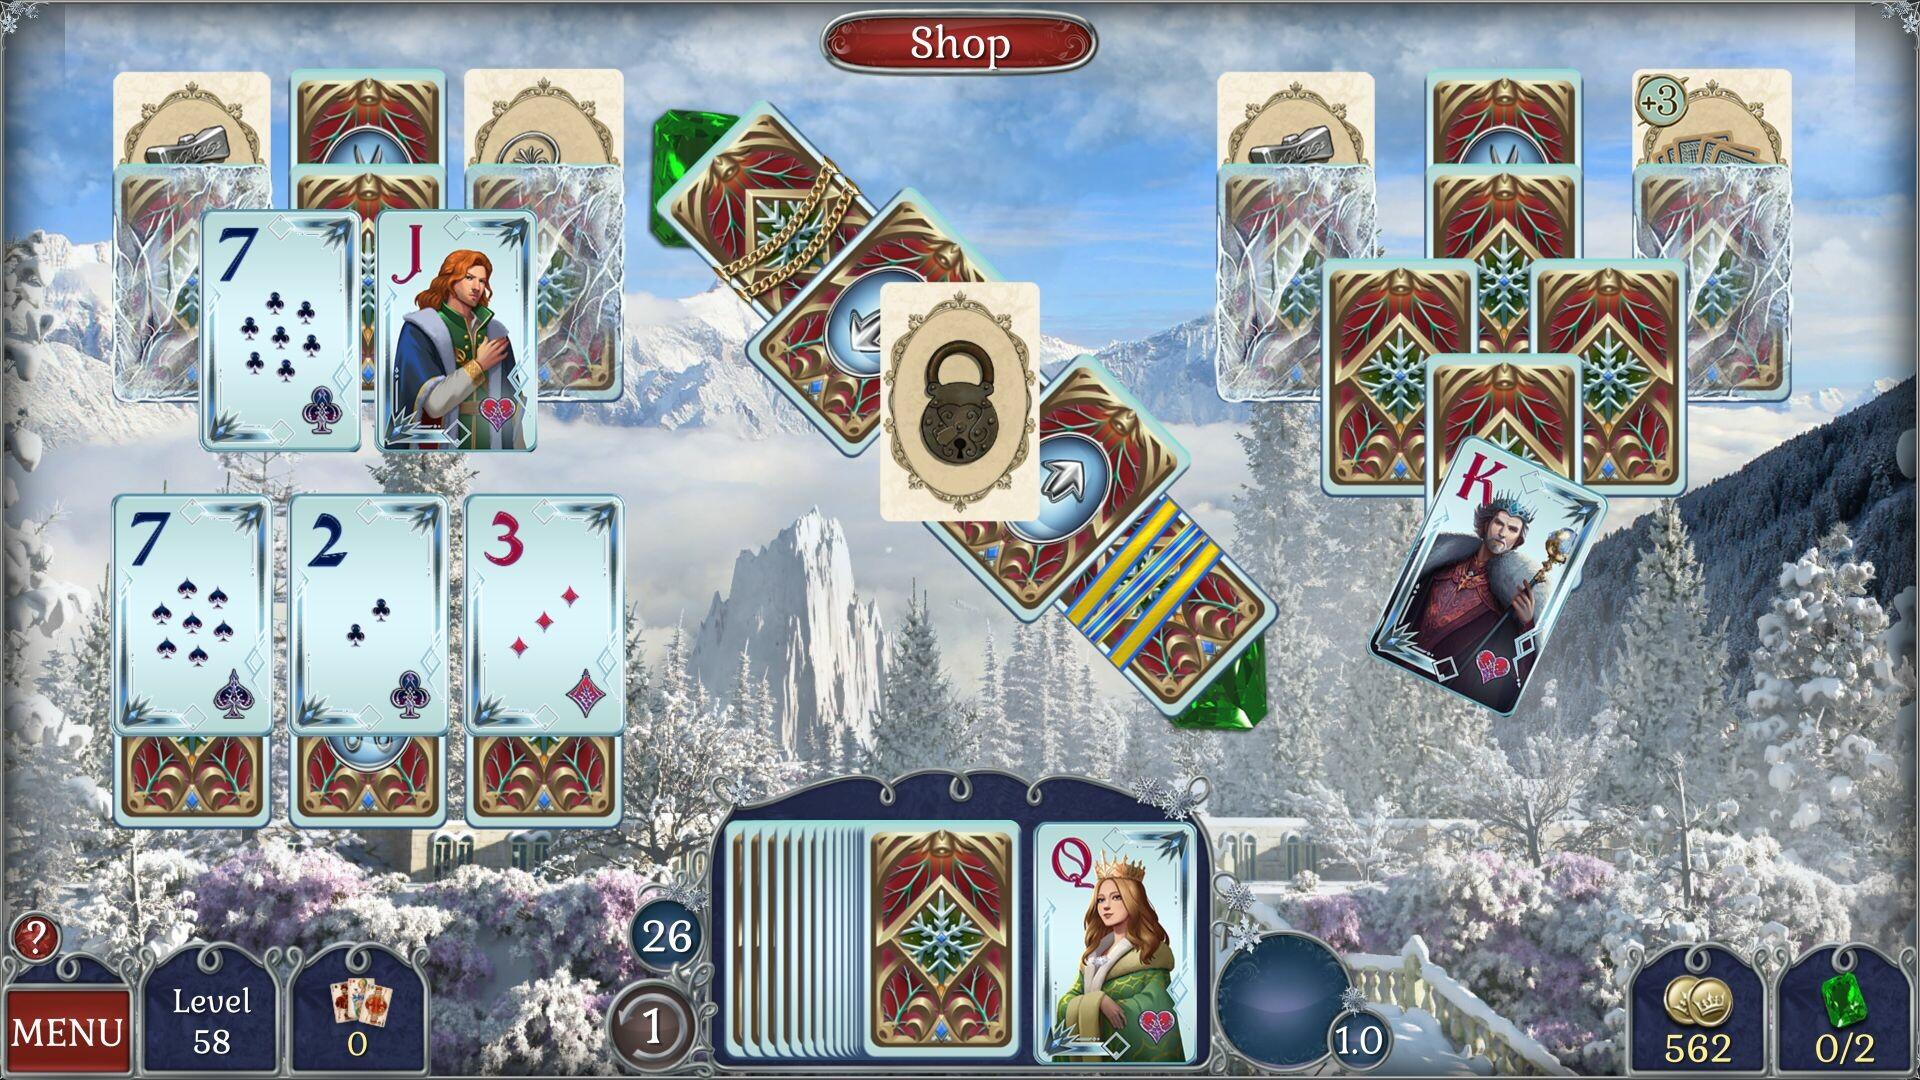 Screenshot 1 of Jewel Match Solitaire Winterscapes 2 - Phiên bản sưu tập 